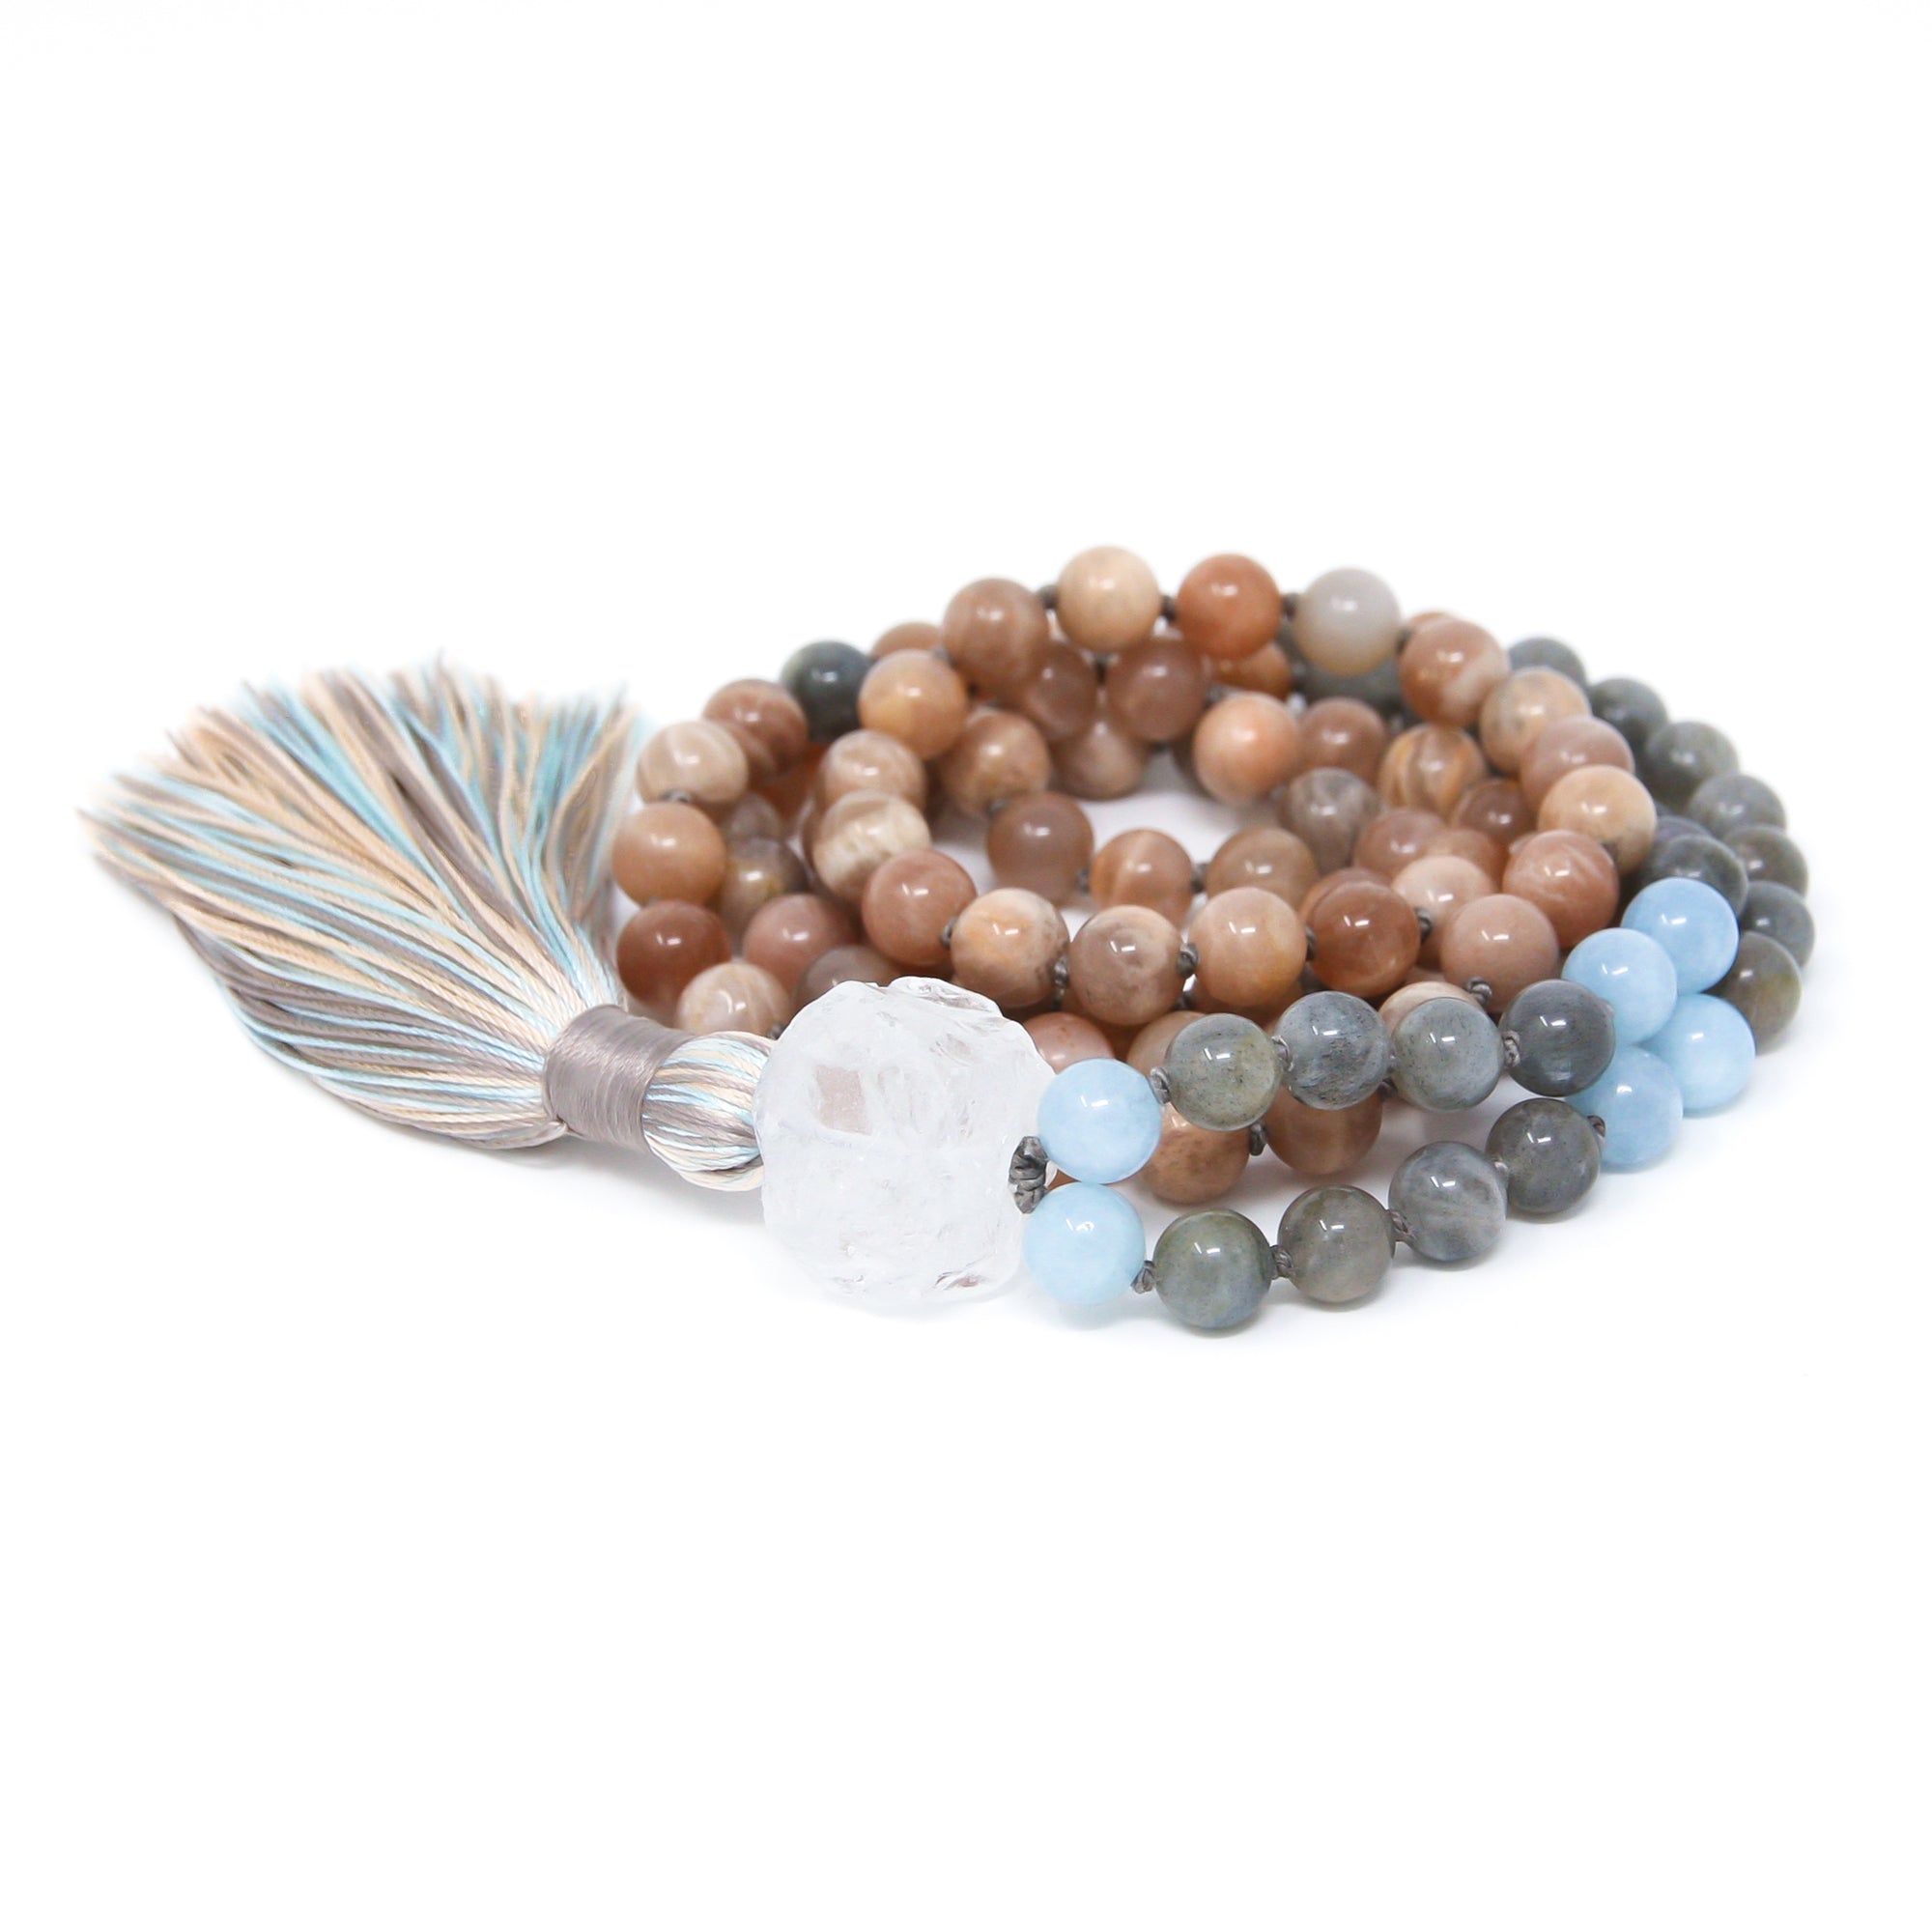 sunstone labradorite knotted mala beads, long tassel necklace